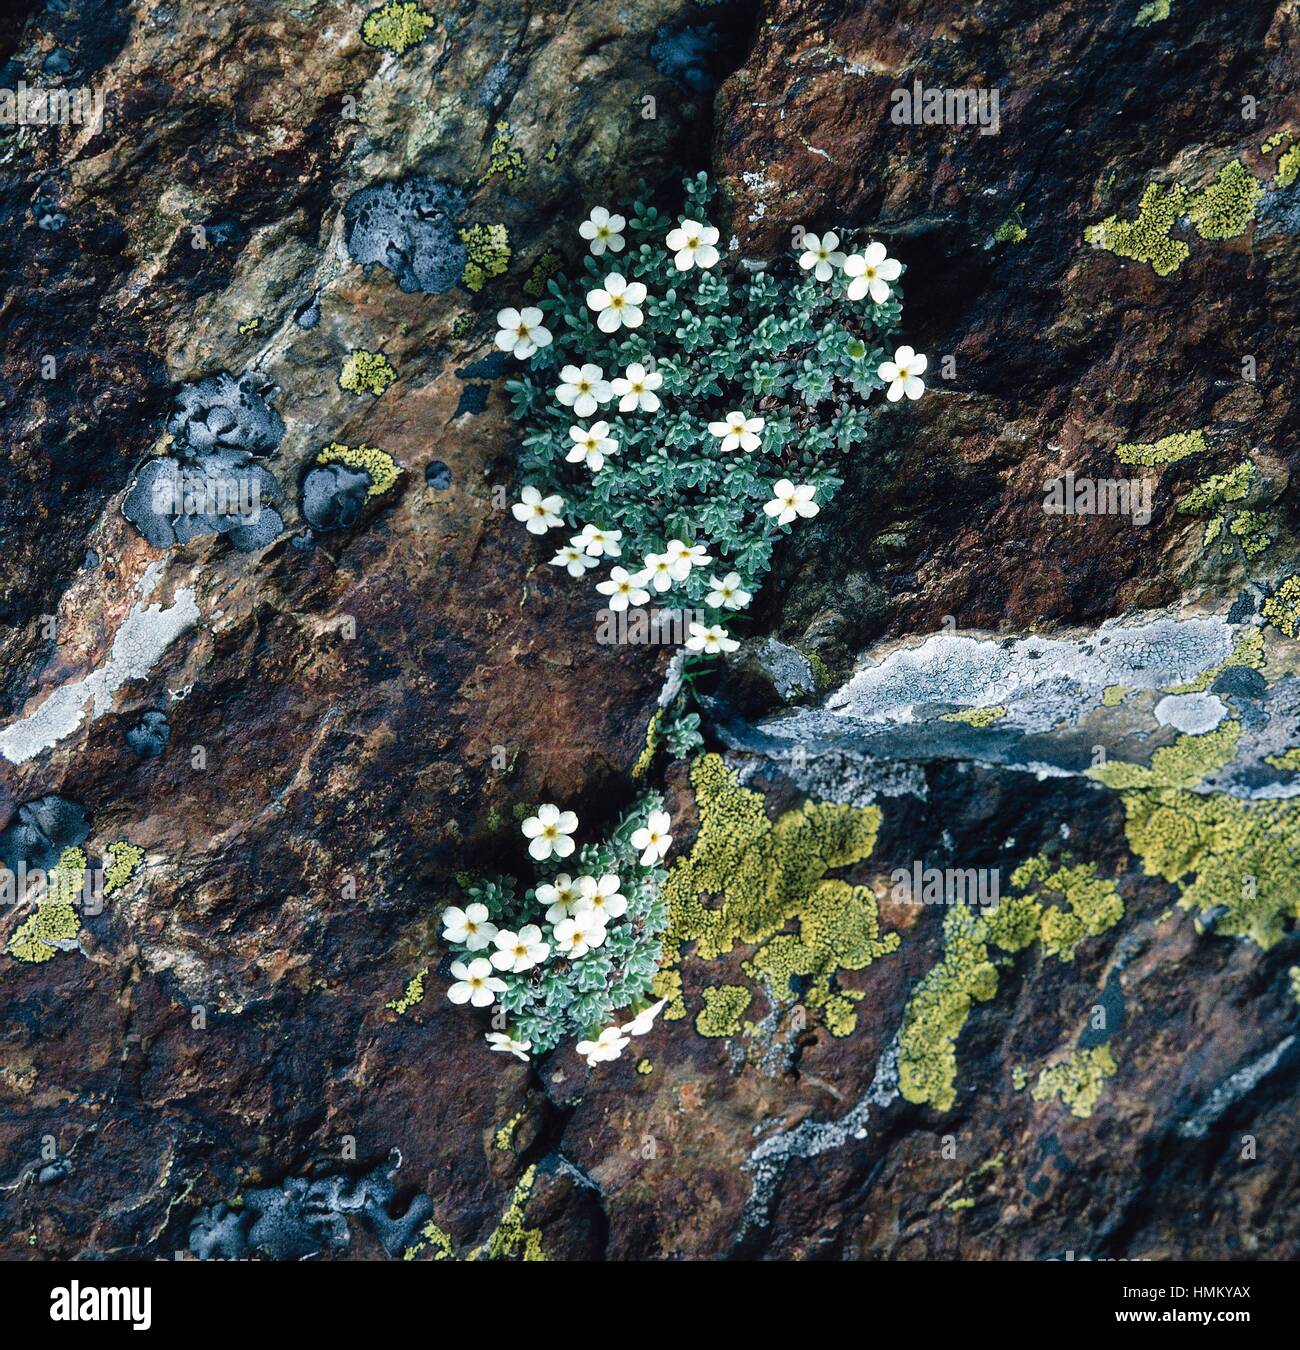 Siliceous rock with Androsace vandellii, Primulaceae, and Rhizocarpon geographicum, Rhizocarpaceae. Stock Photo